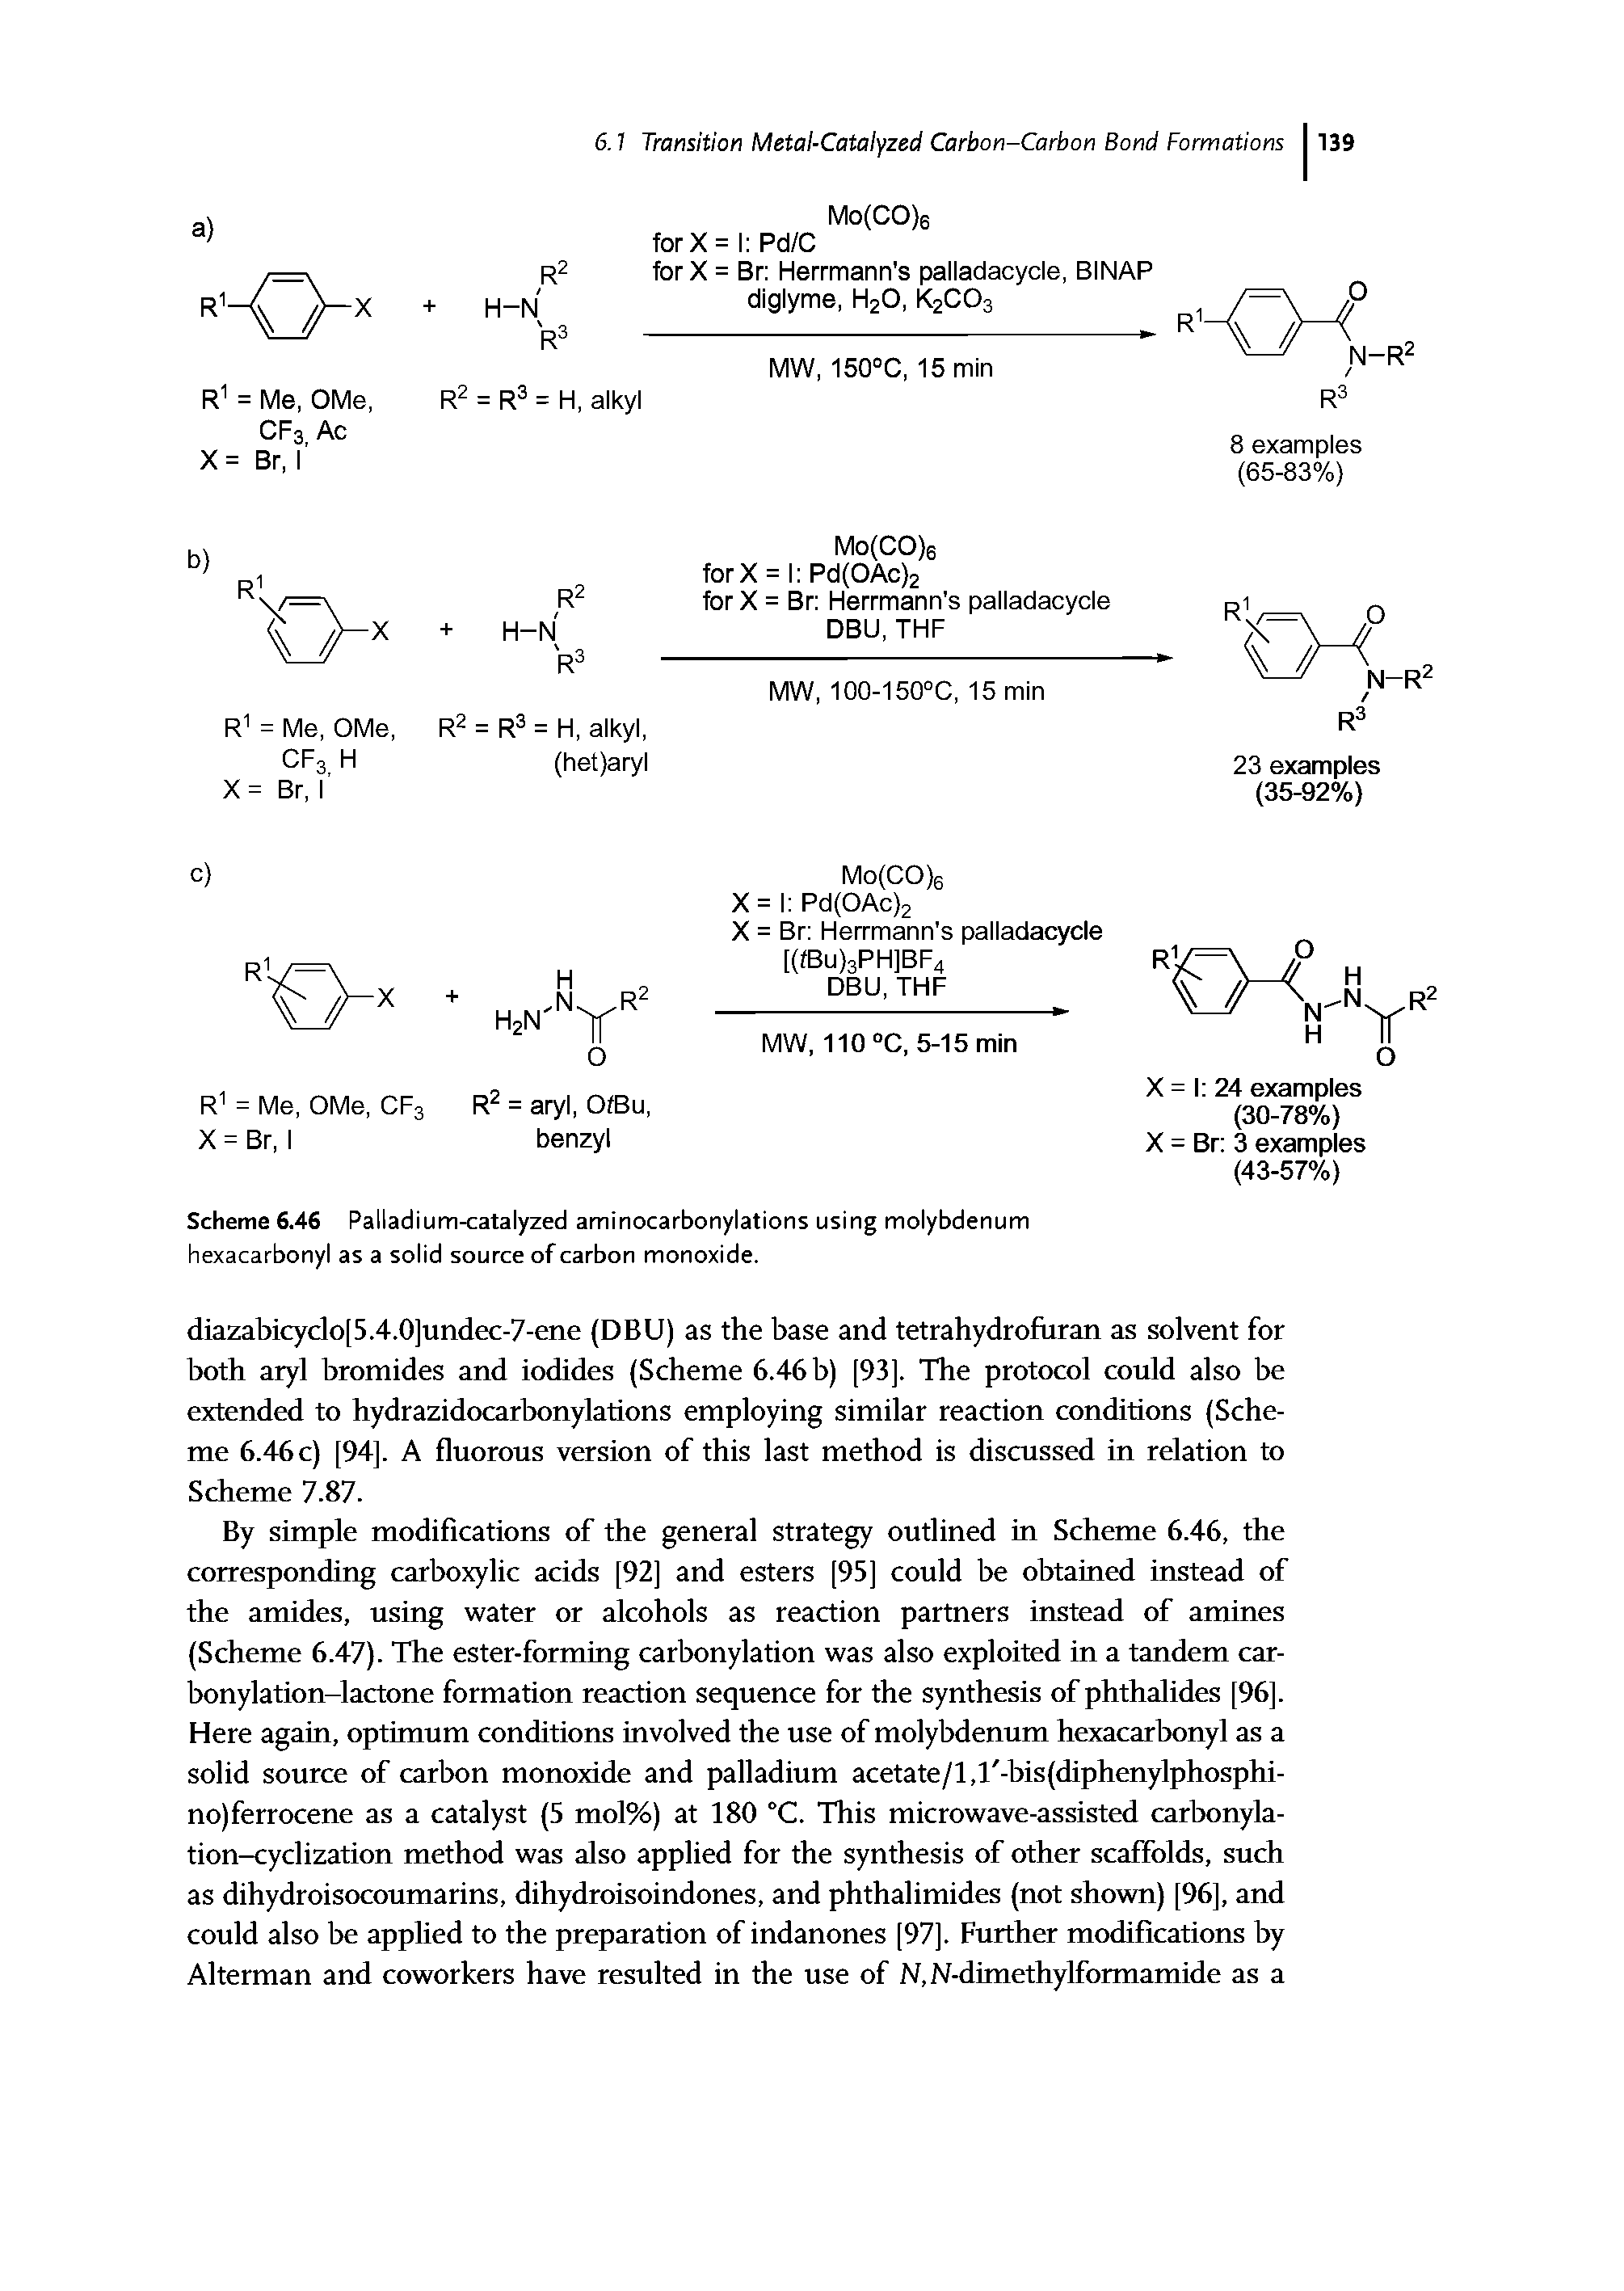 Scheme 6.46 Palladium-catalyzed aminocarbonylations using molybdenum hexacarbonyl as a solid source of carbon monoxide.